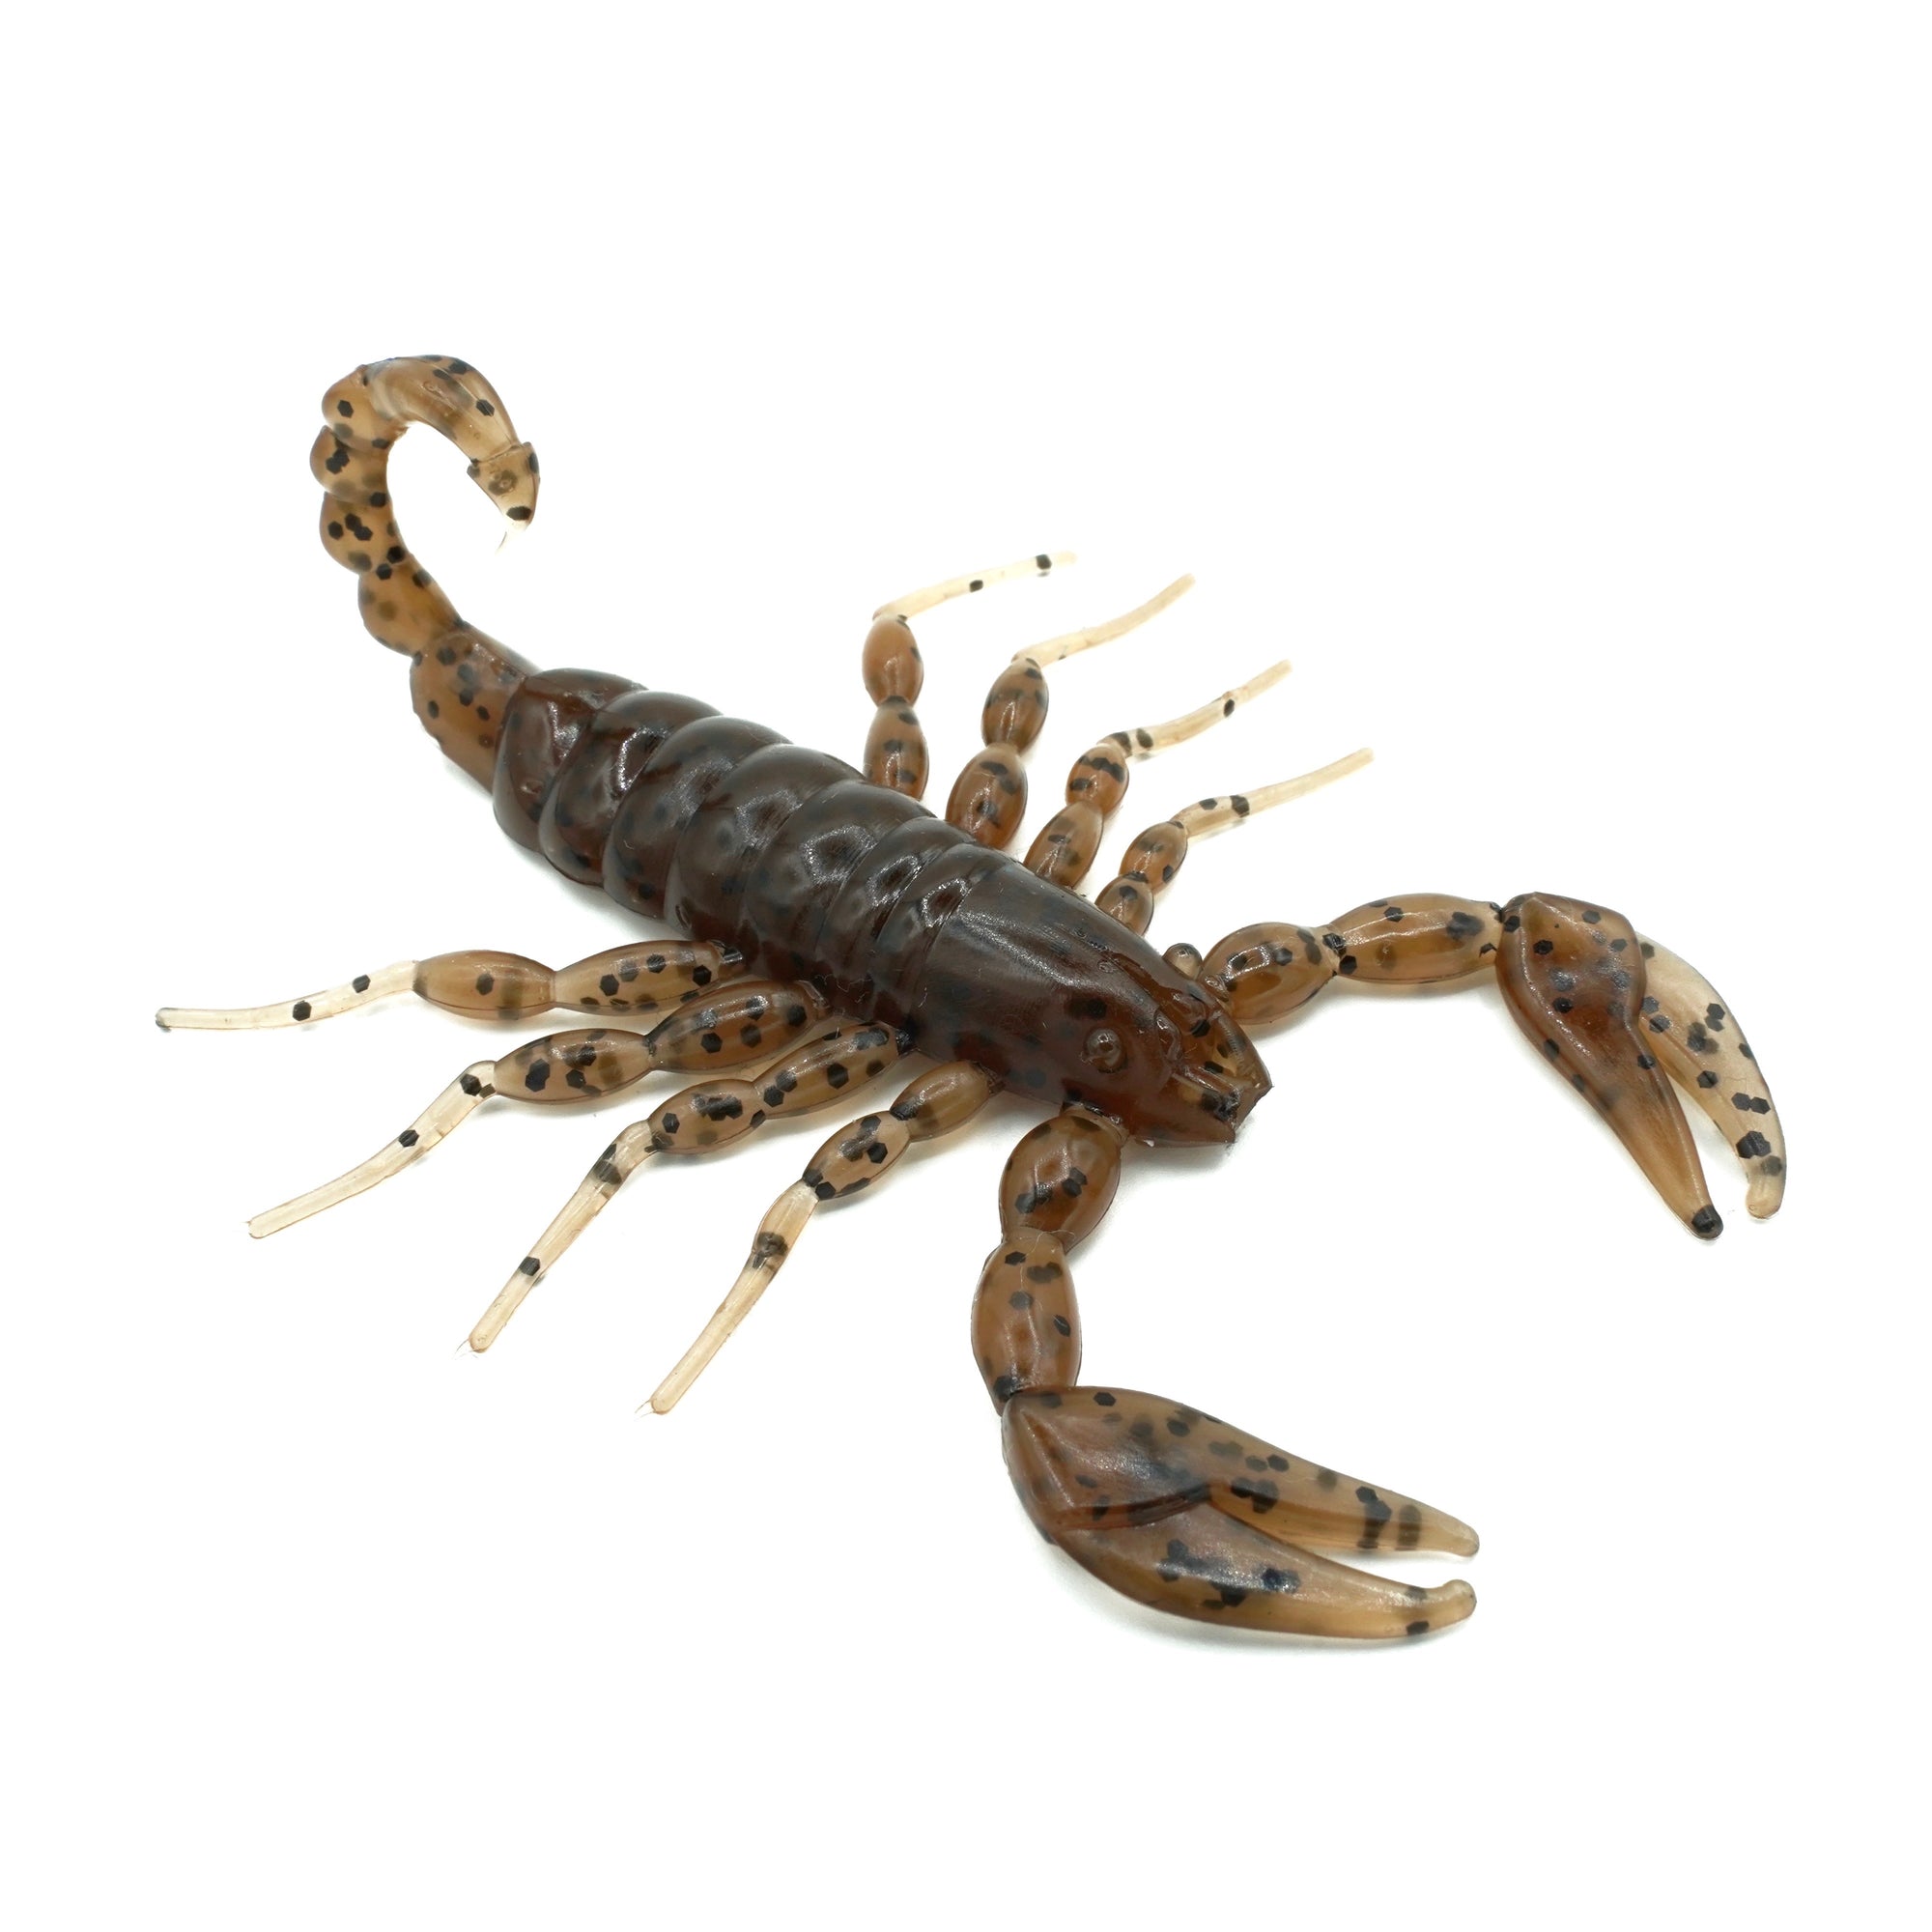 brown and black fleck soft plastic scorpion bait used for fishing. Fresh baitz brown bark scorpion